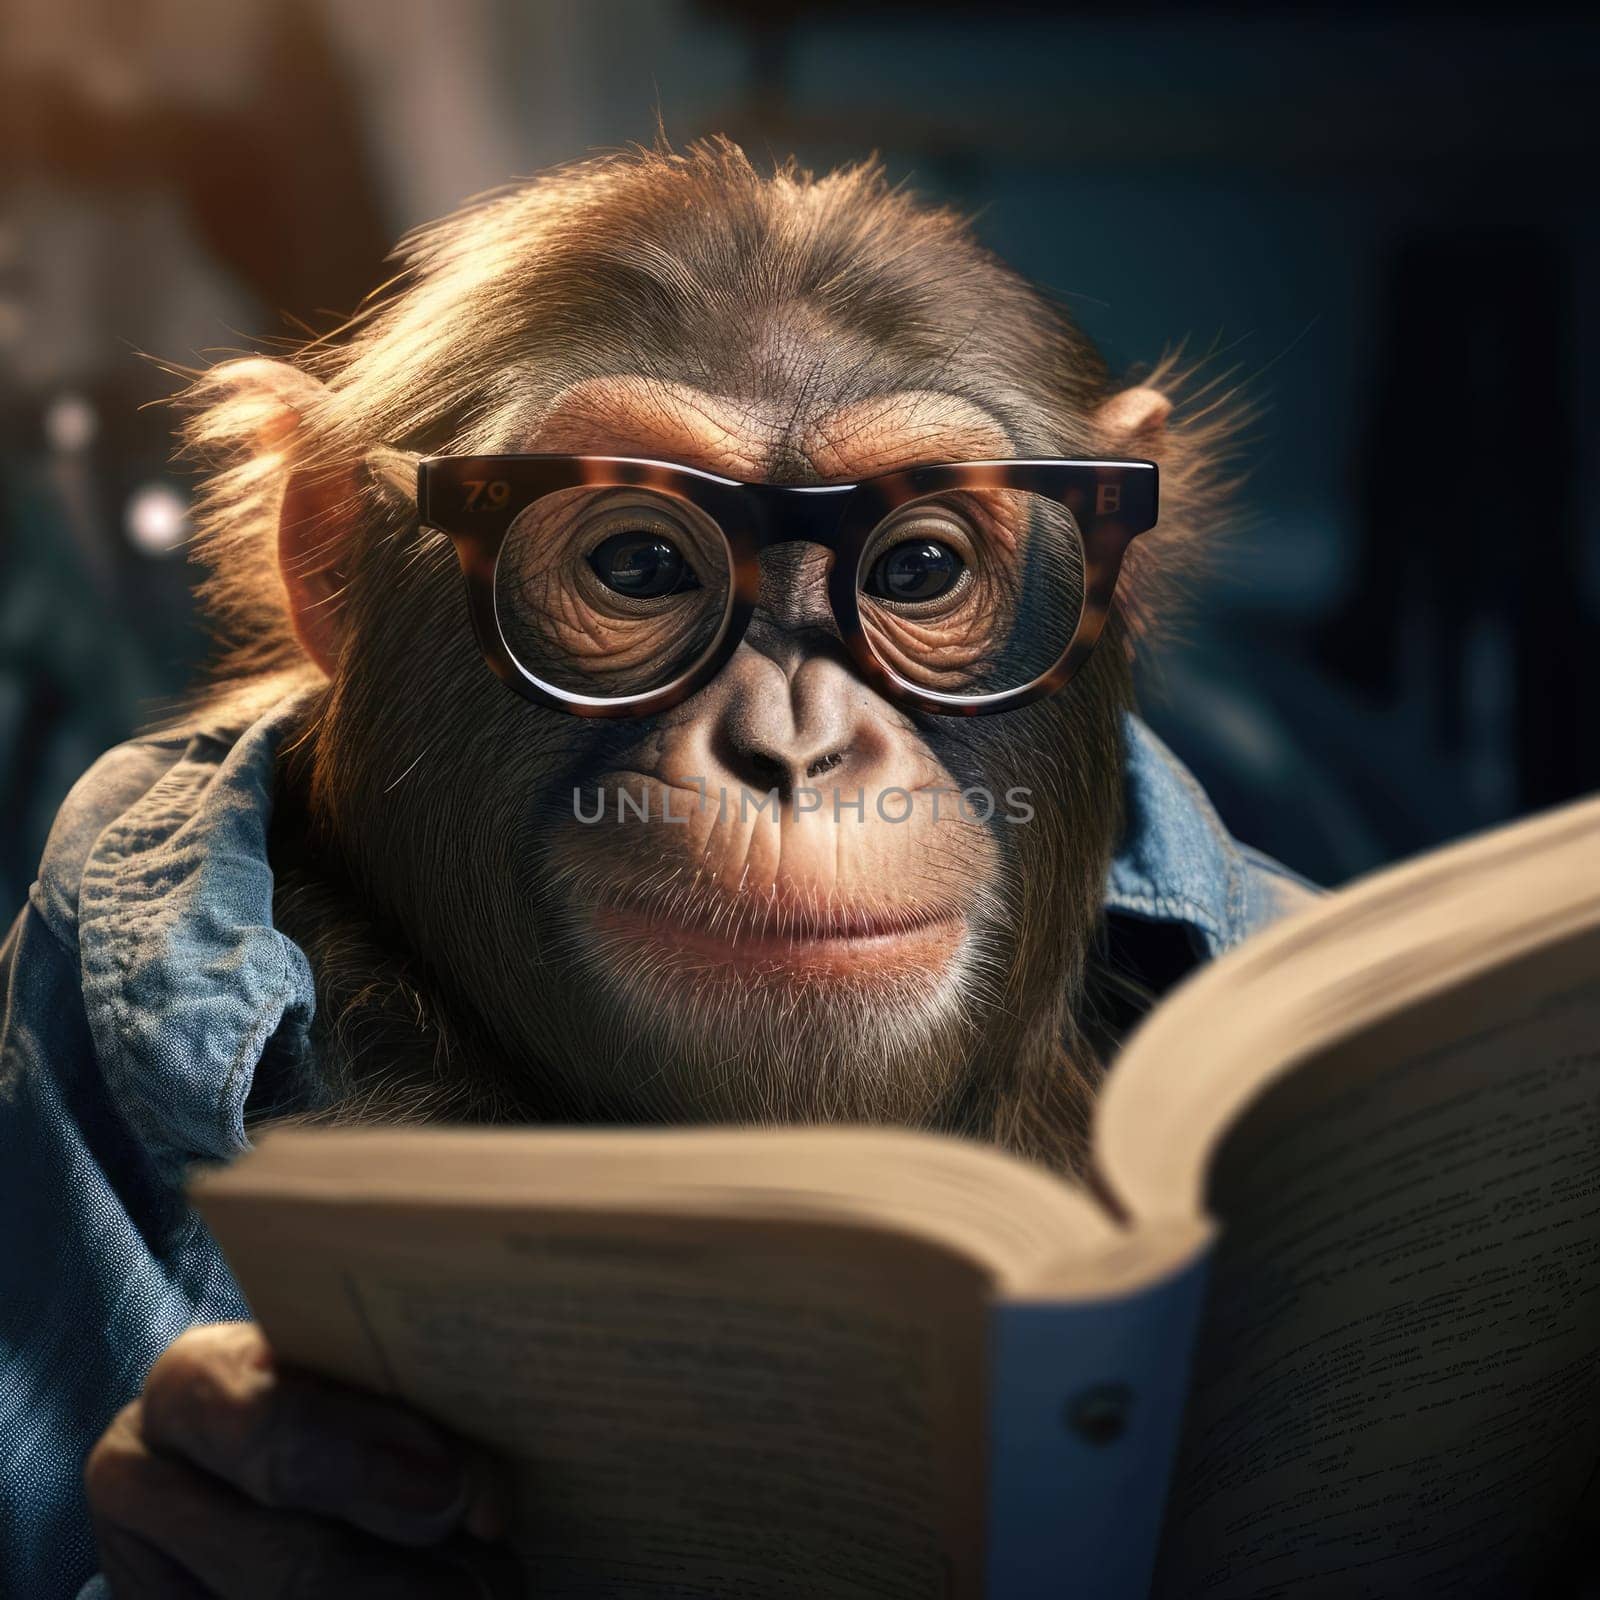 Monkey reading a book, dramatic light